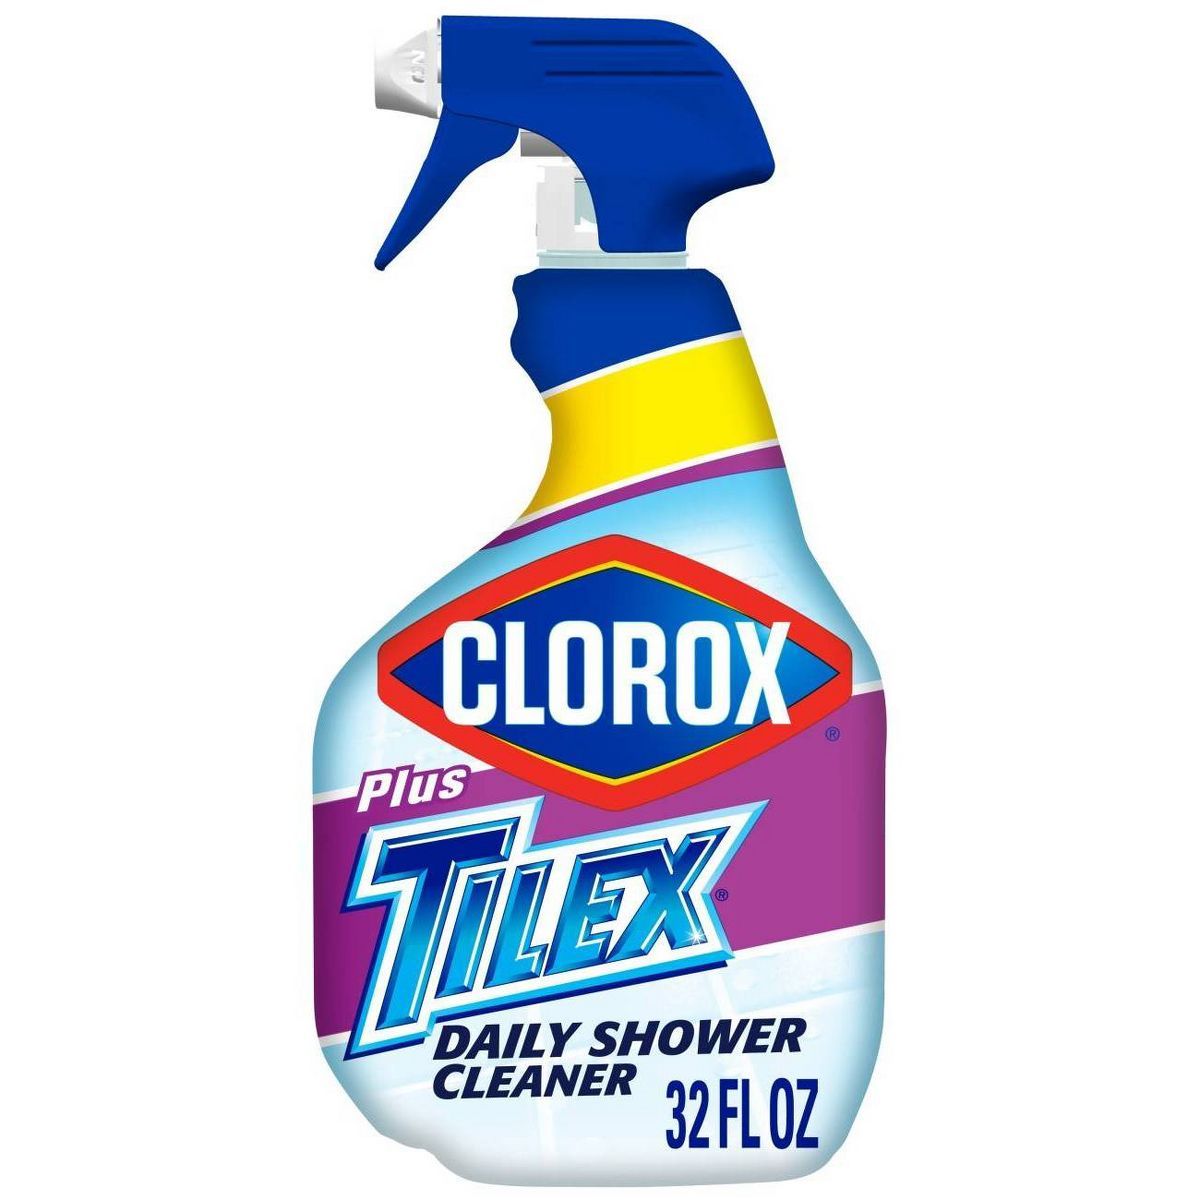 Clorox Plus Tilex Daily Shower Cleaner Spray Bottle - 32oz | Target